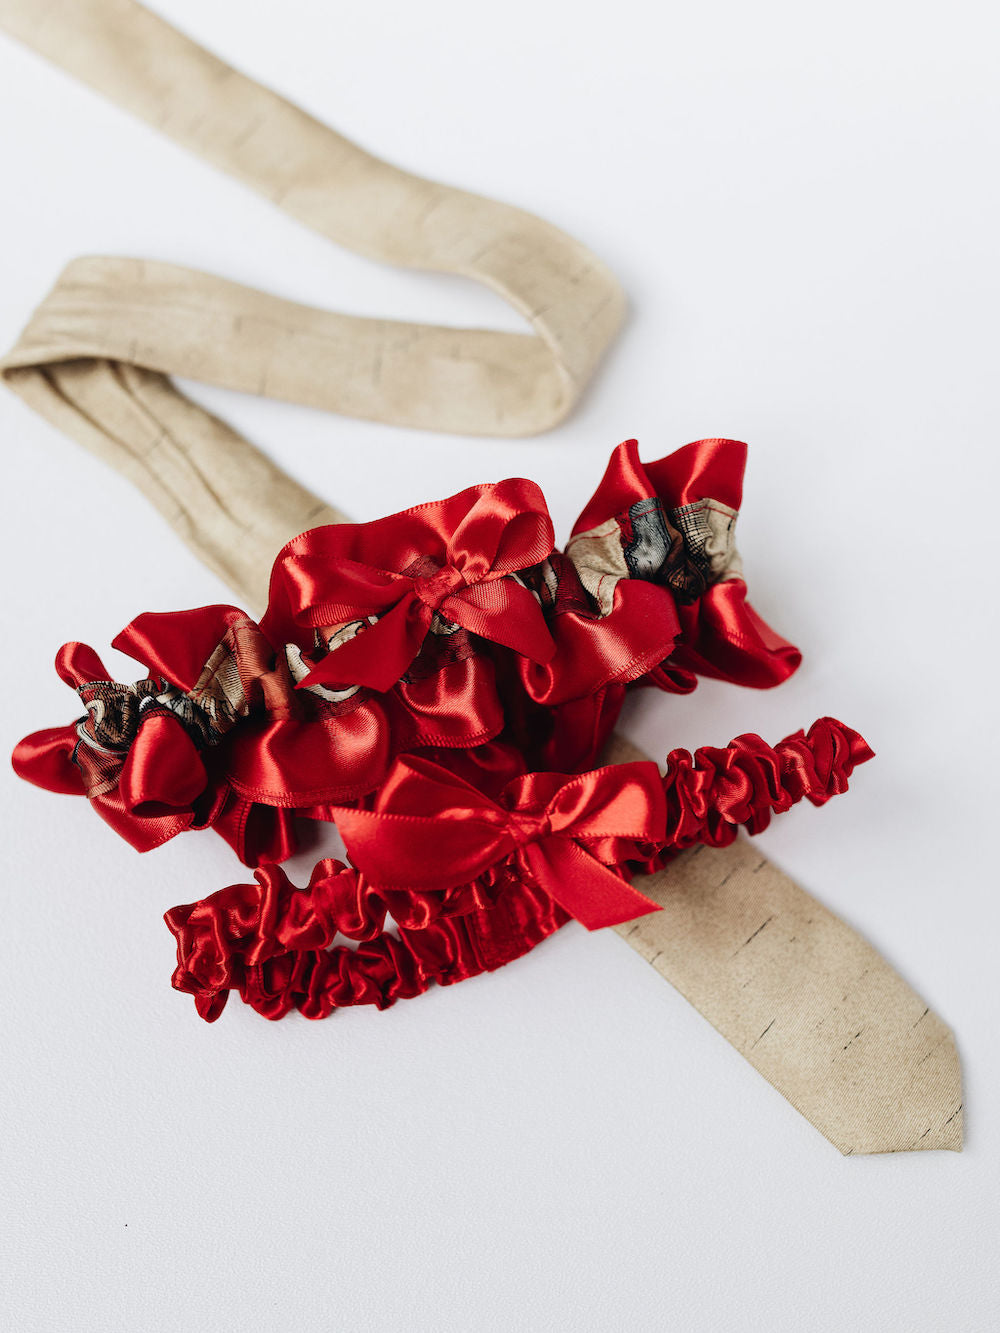 custom heirloom wedding garter set handmade from fathers tie by The Garter Girl